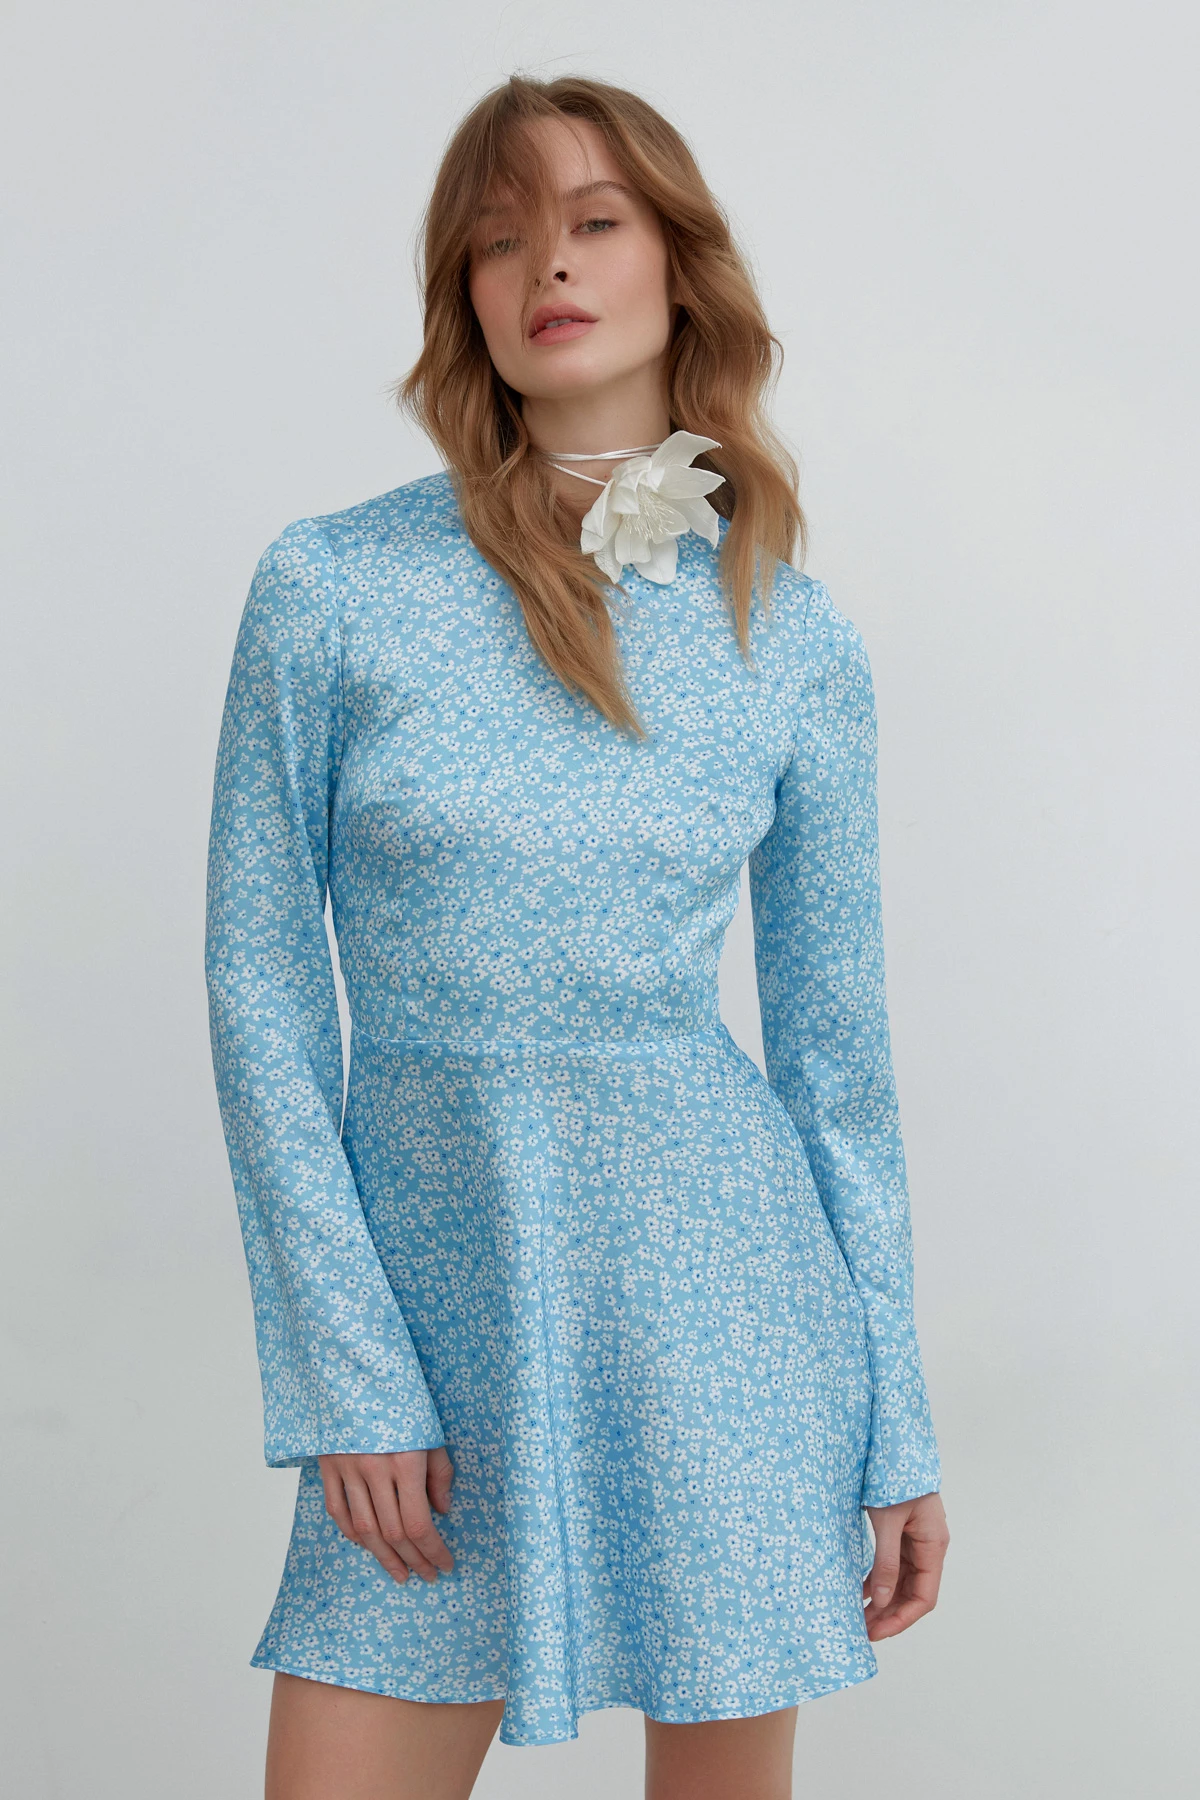 Short blue satin dress in "milky flowers" print, photo 6